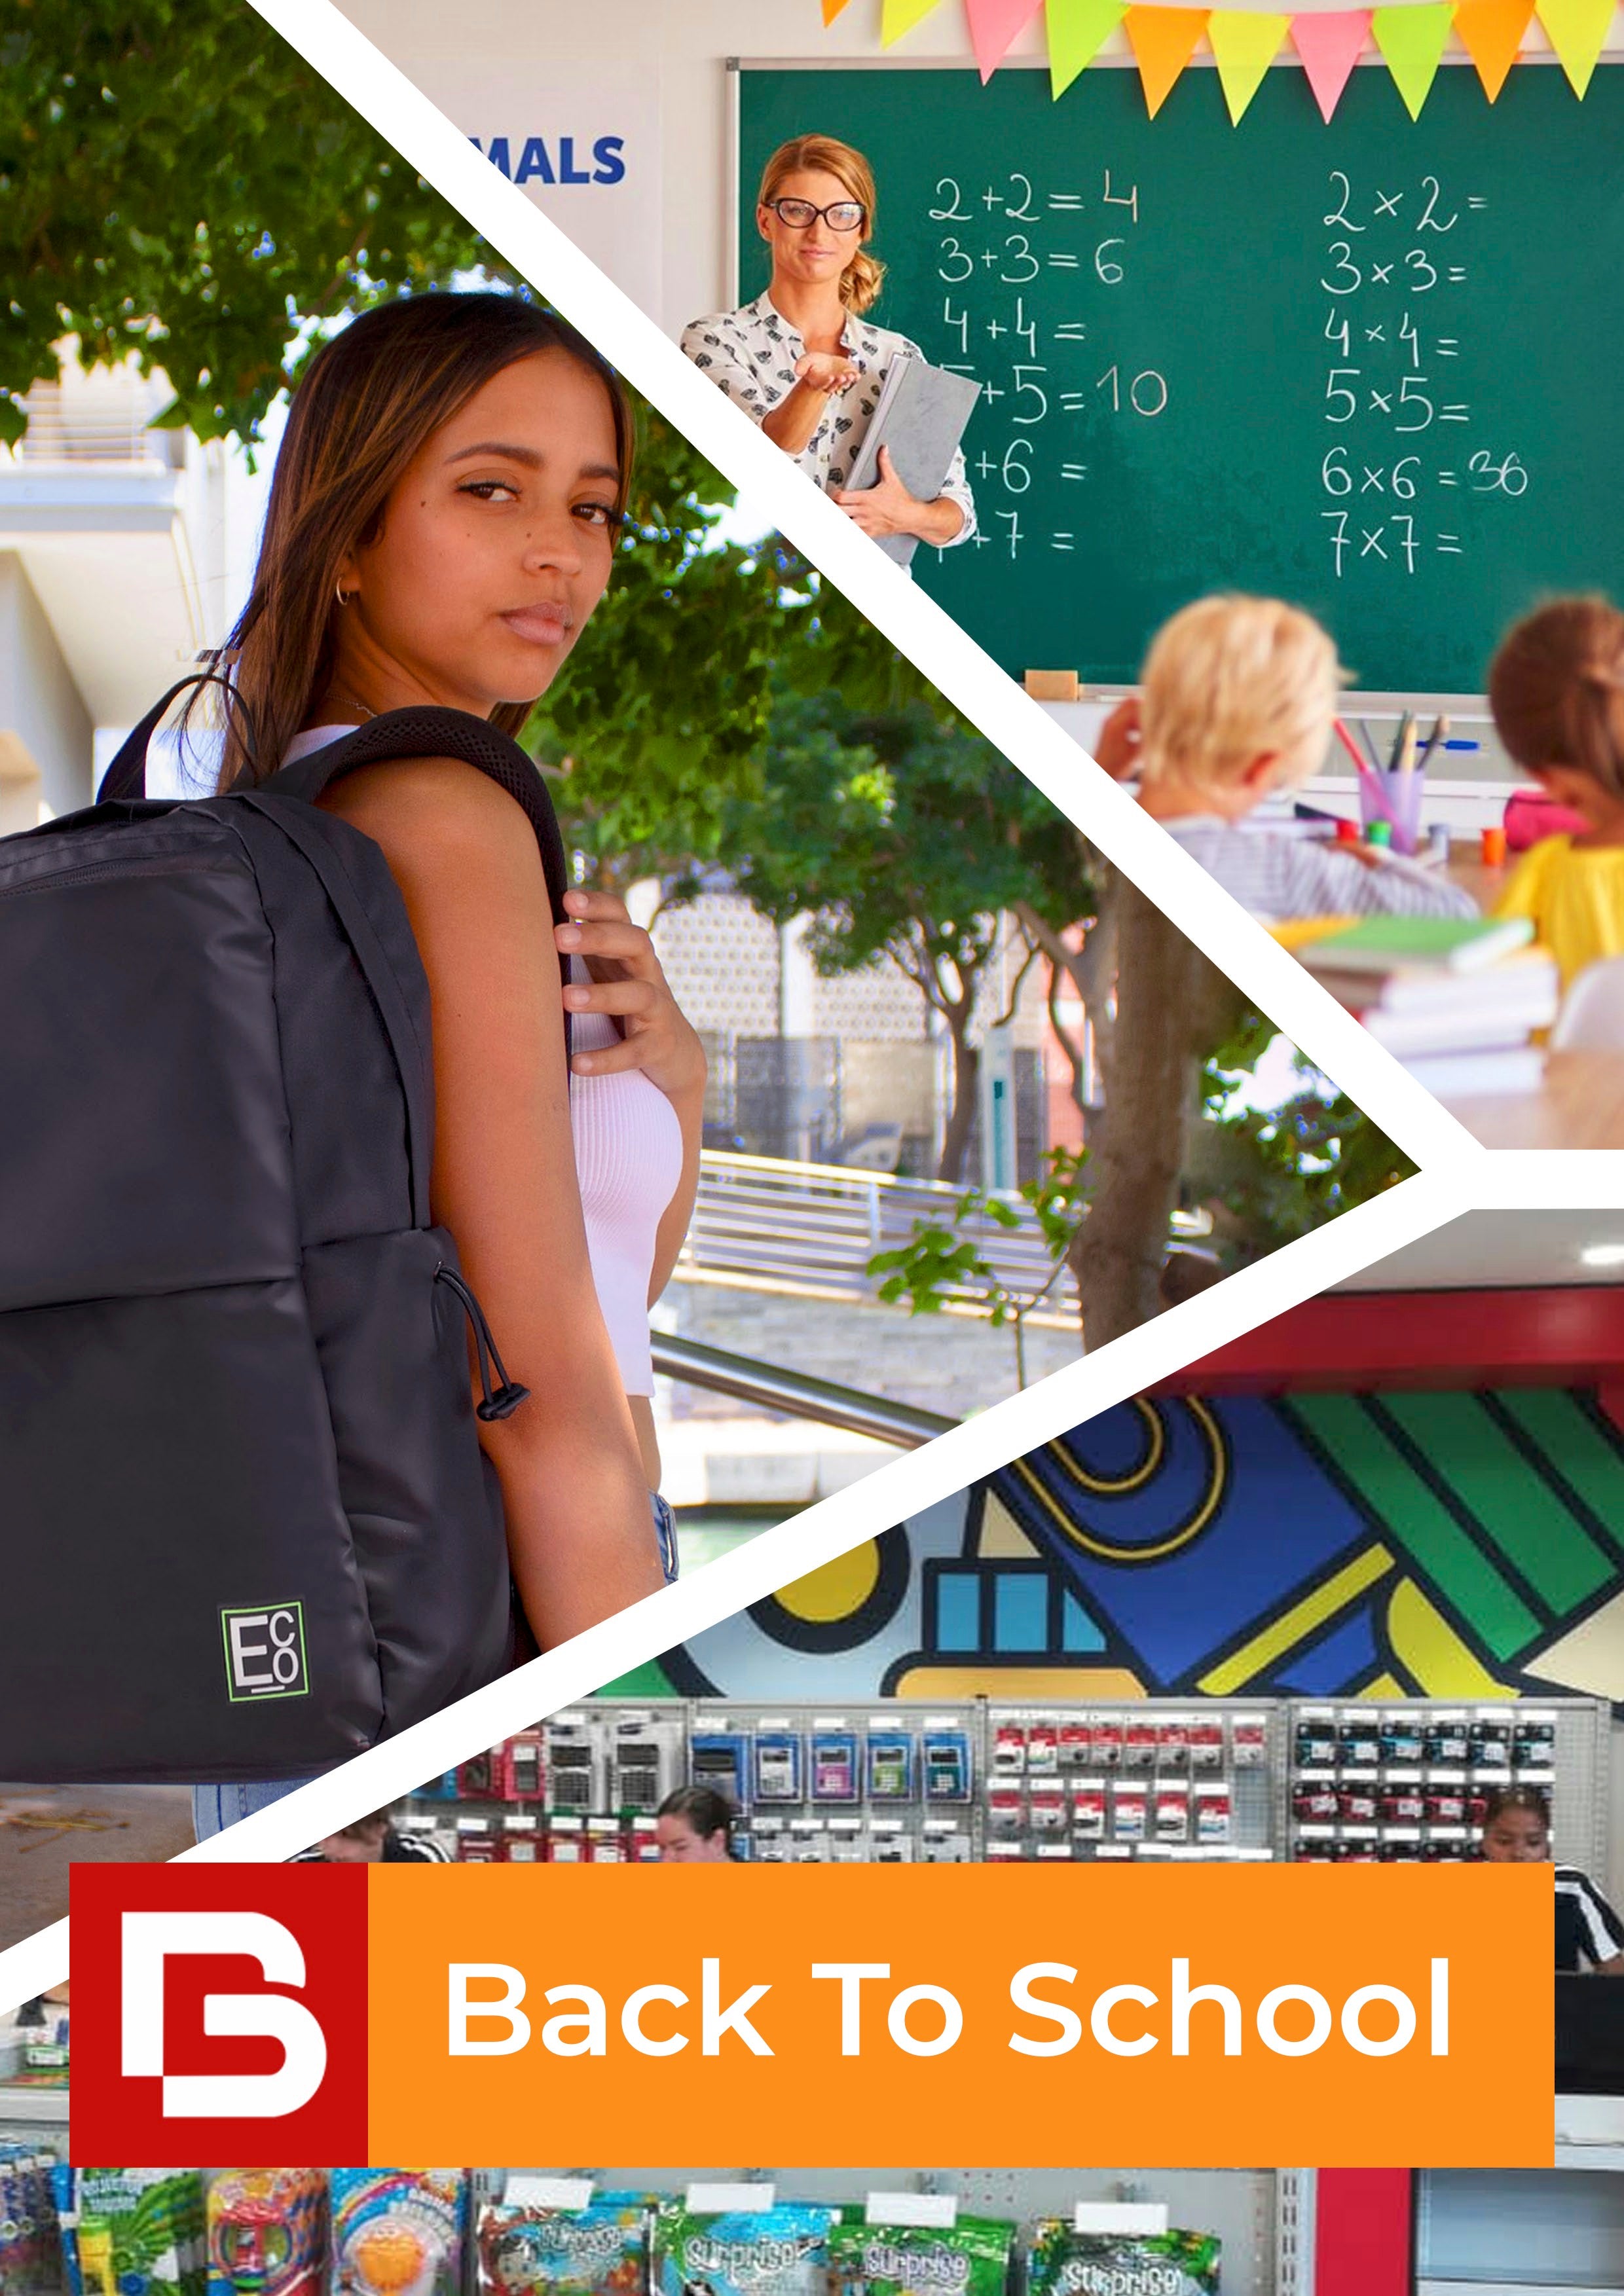 Catálogo de mochilas, bolsos, mochilas escolares.